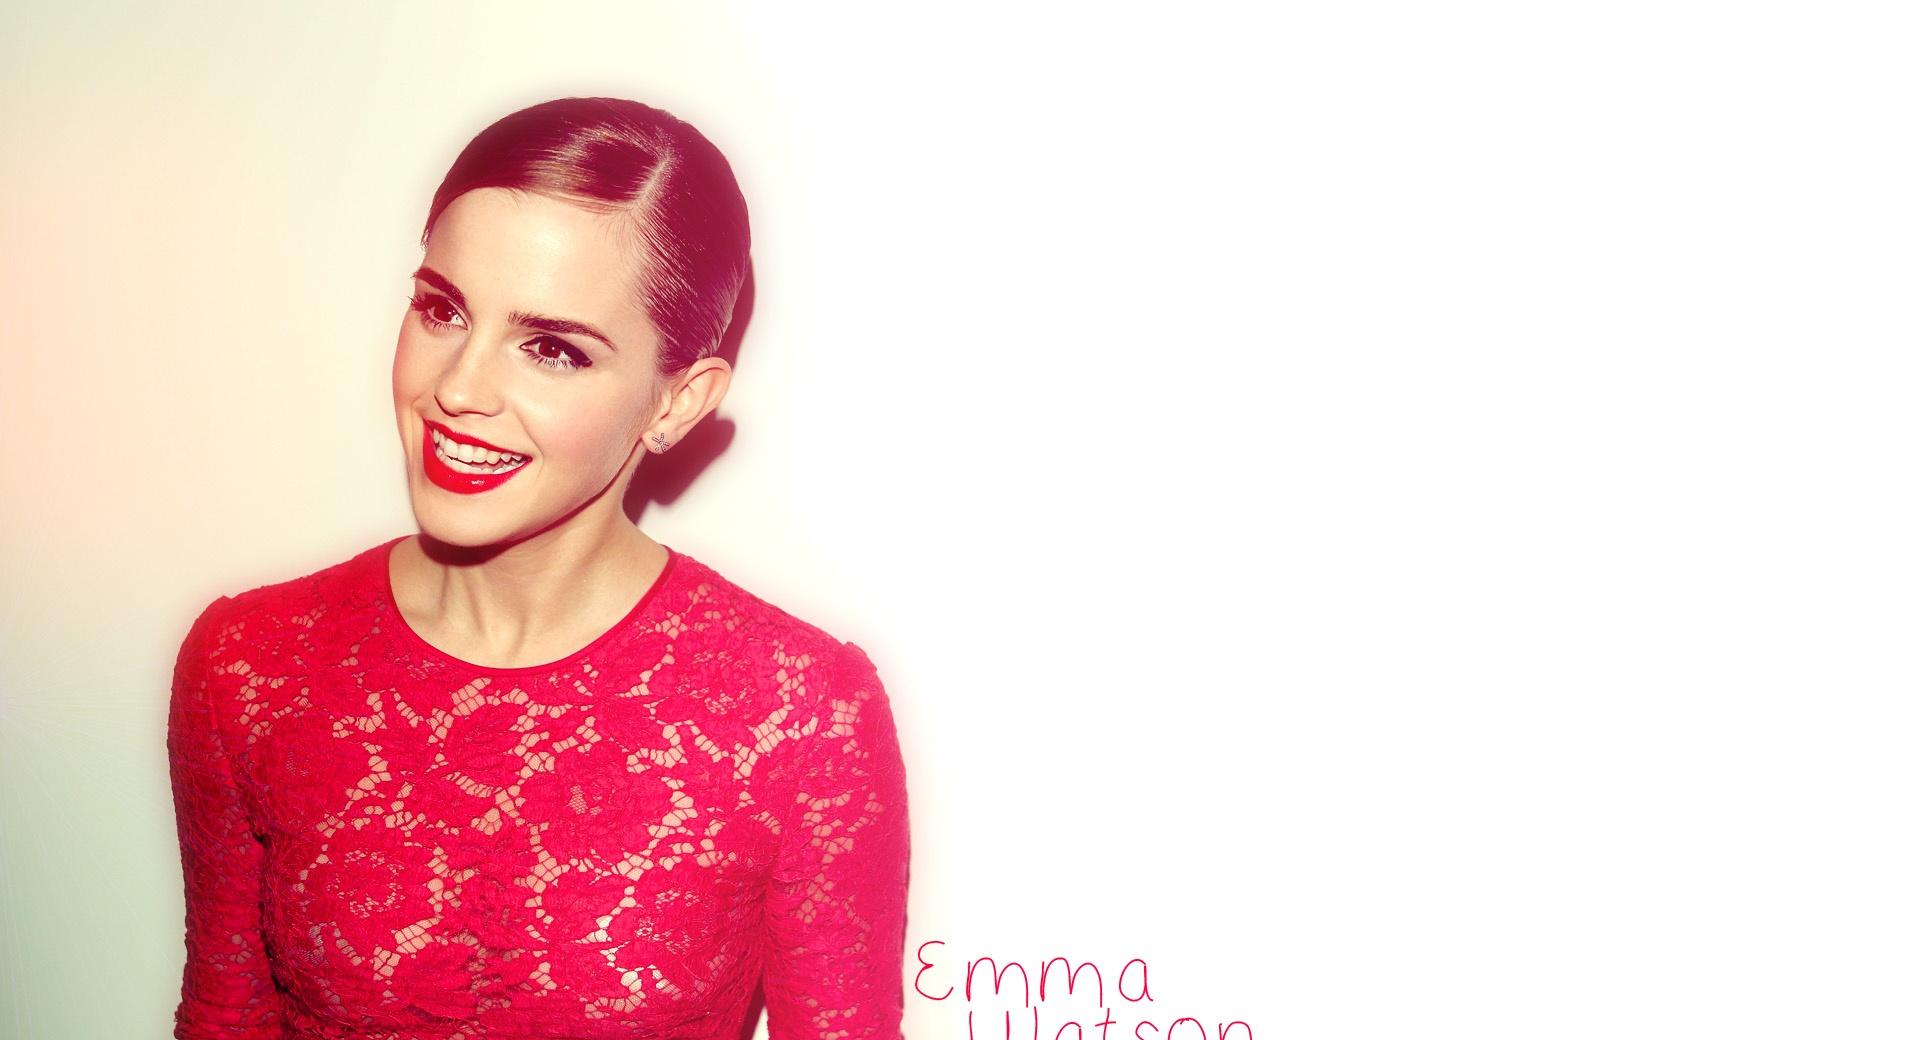 Emma Watson Red Dress (2012) at 2048 x 2048 iPad size wallpapers HD quality